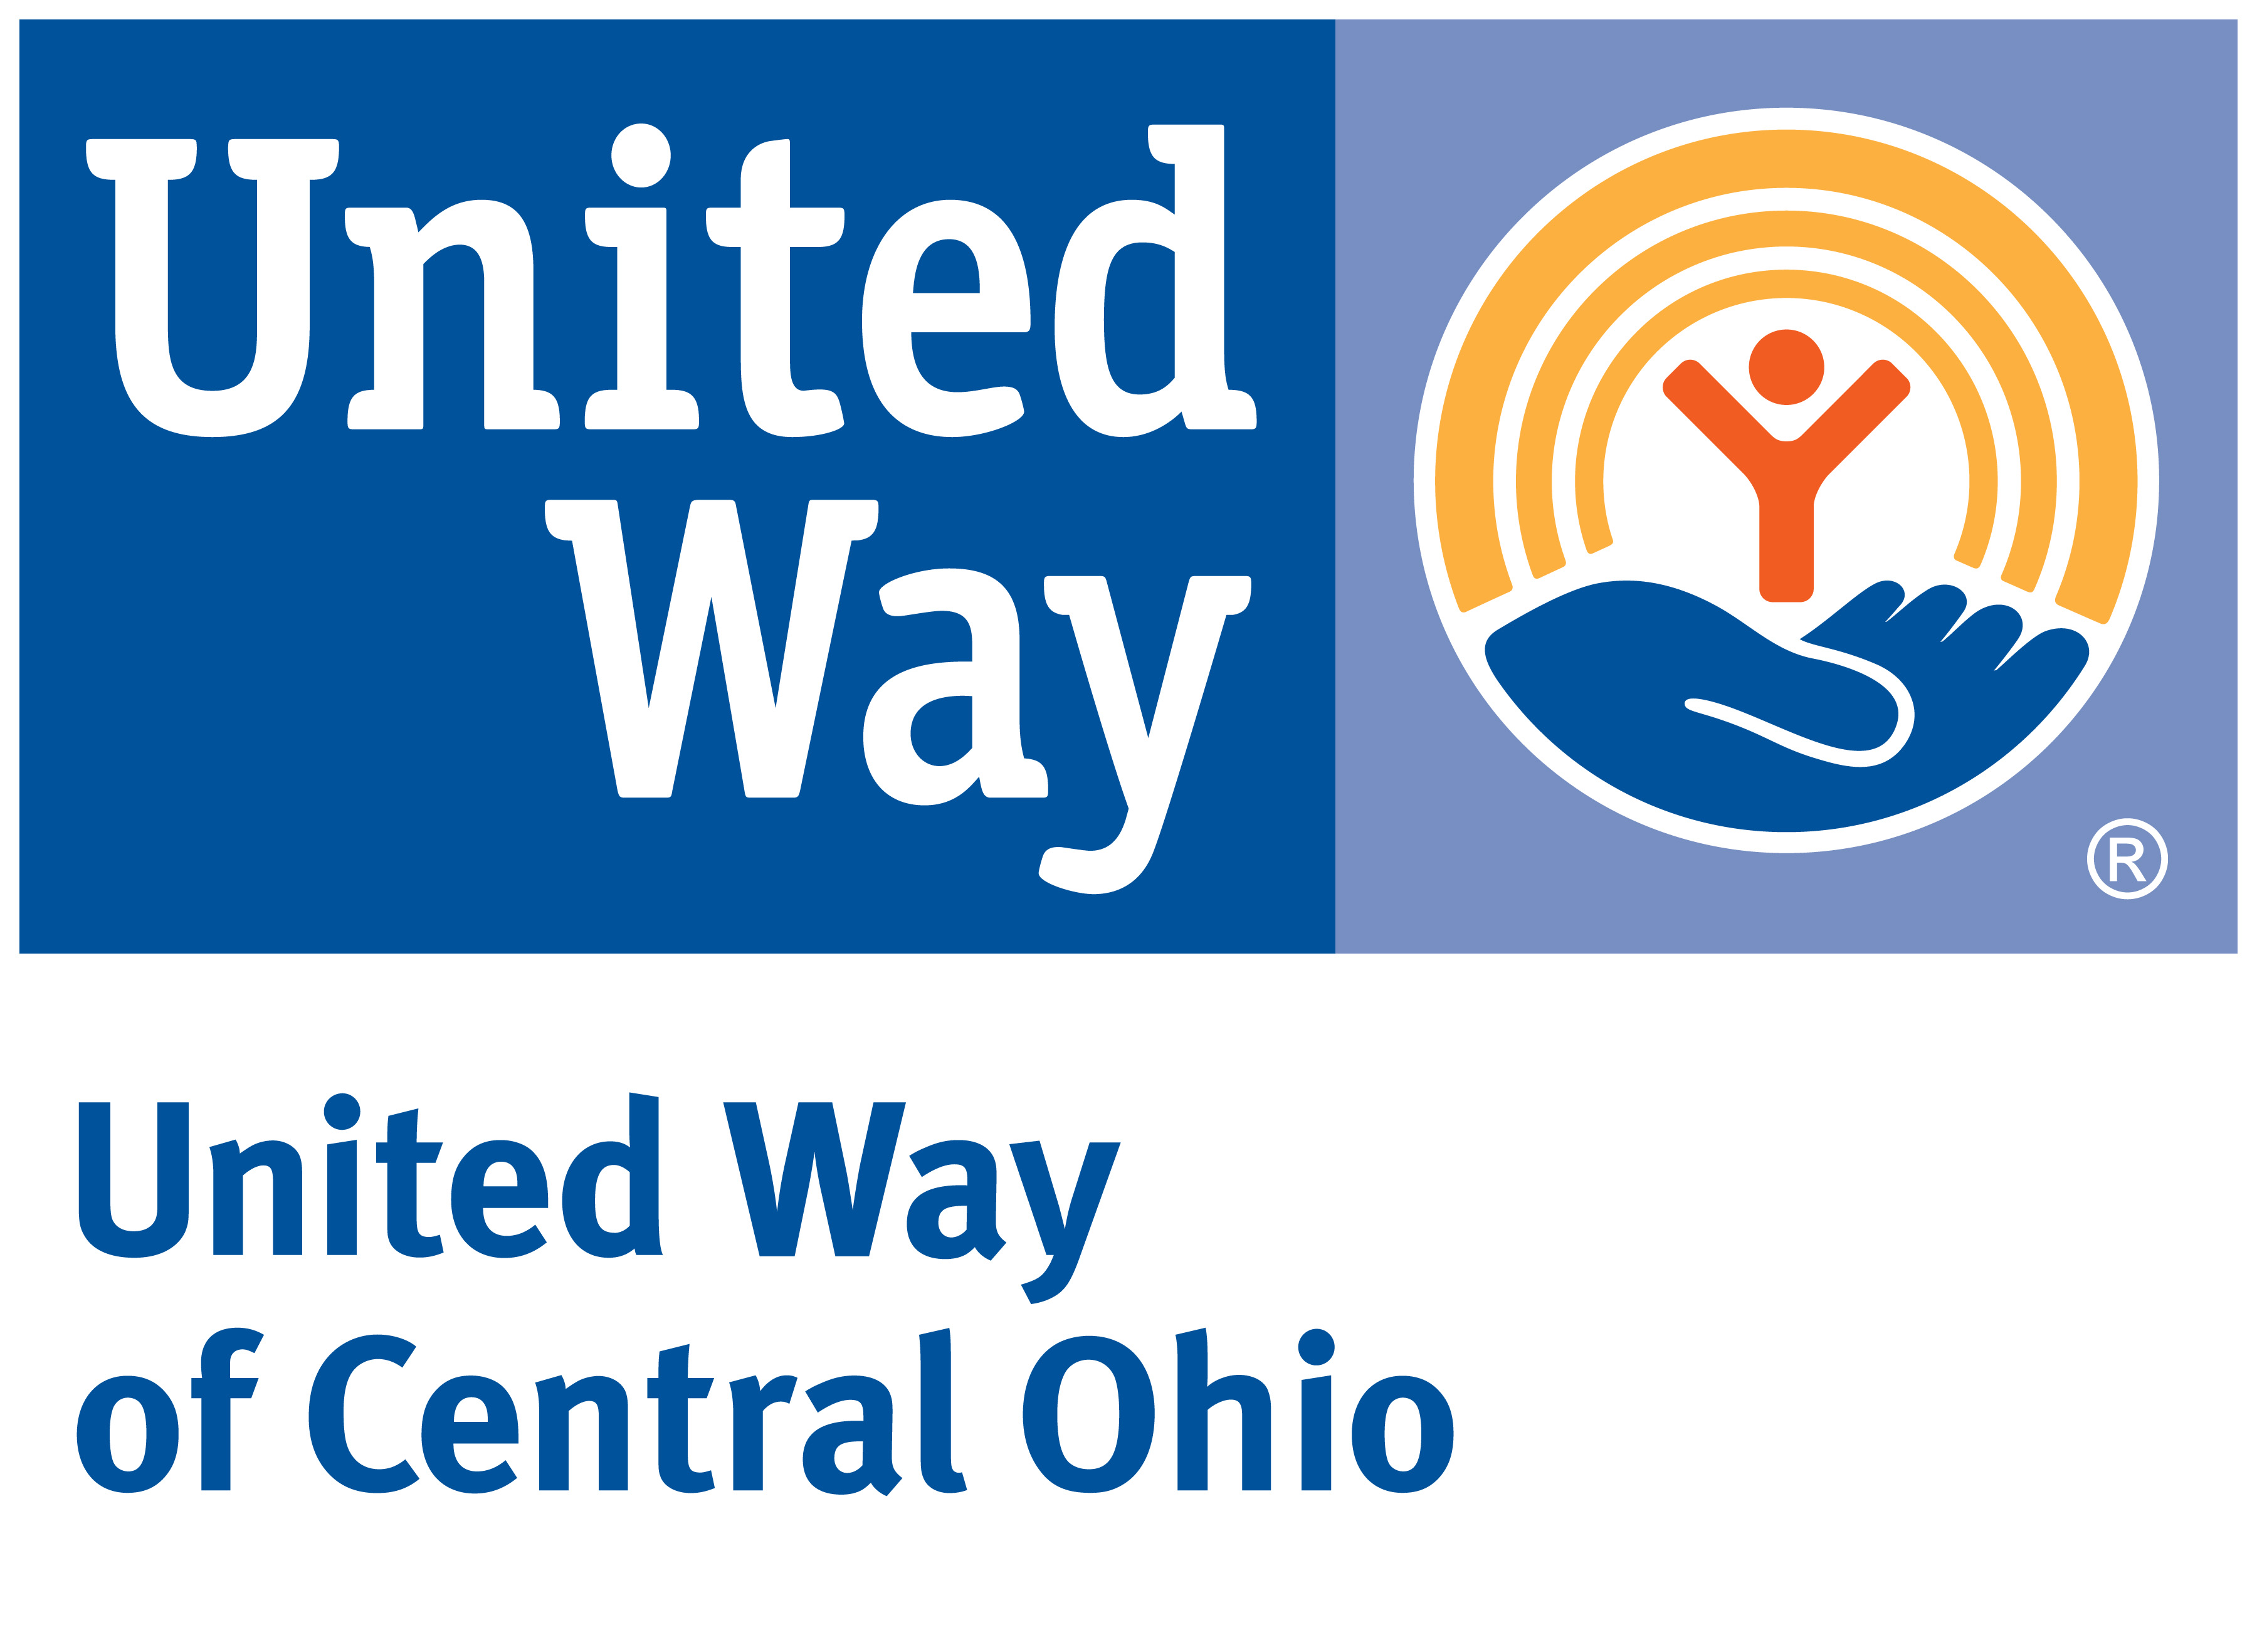 United Way of Central Ohio logo